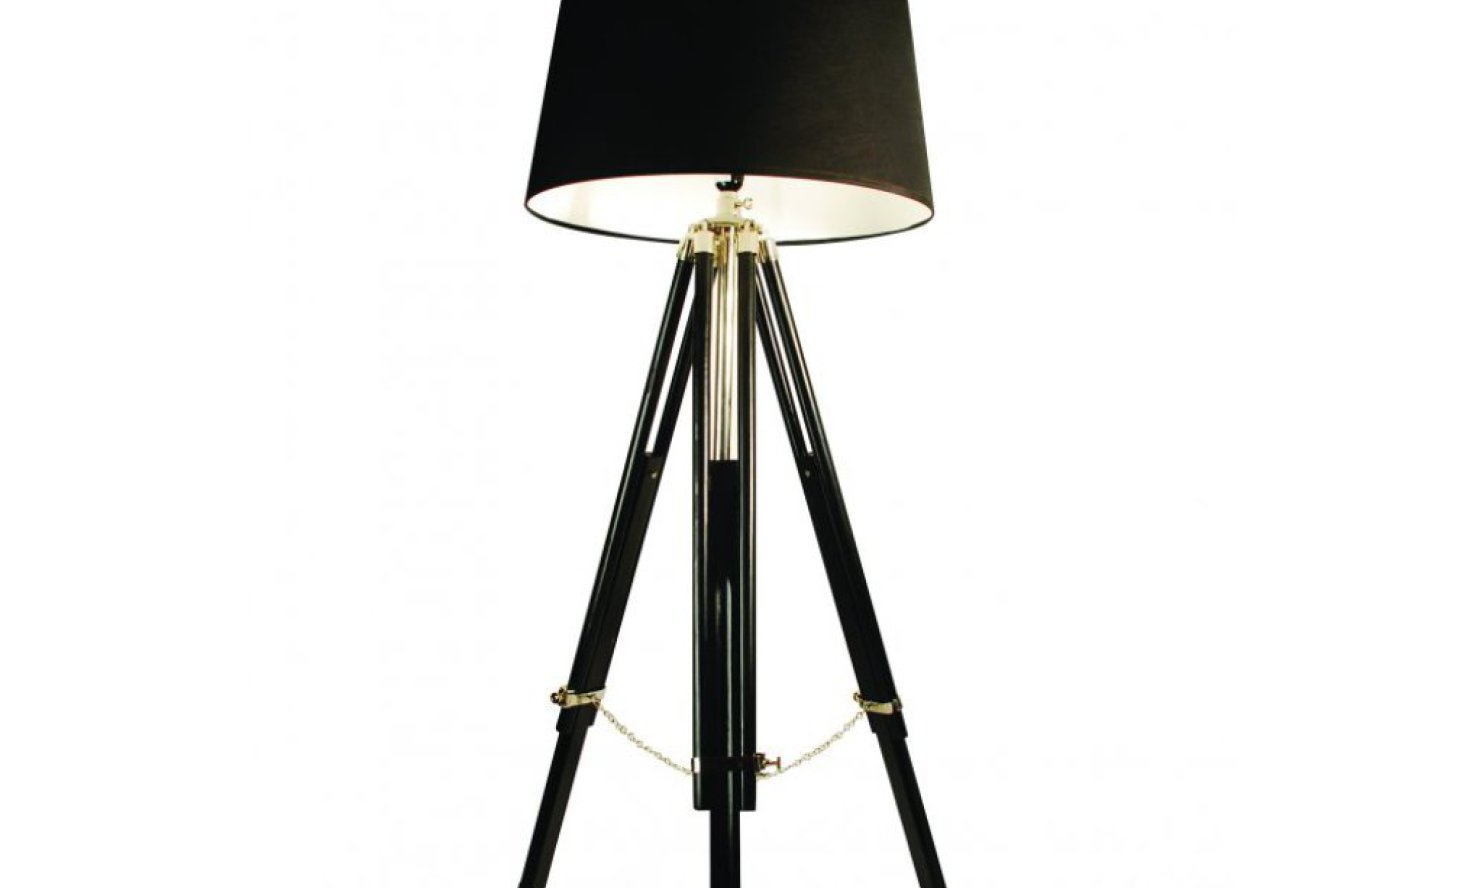 Living Room Floor Lamp Ideas New Tiffany Floor Light Retro with sizing 1483 X 888